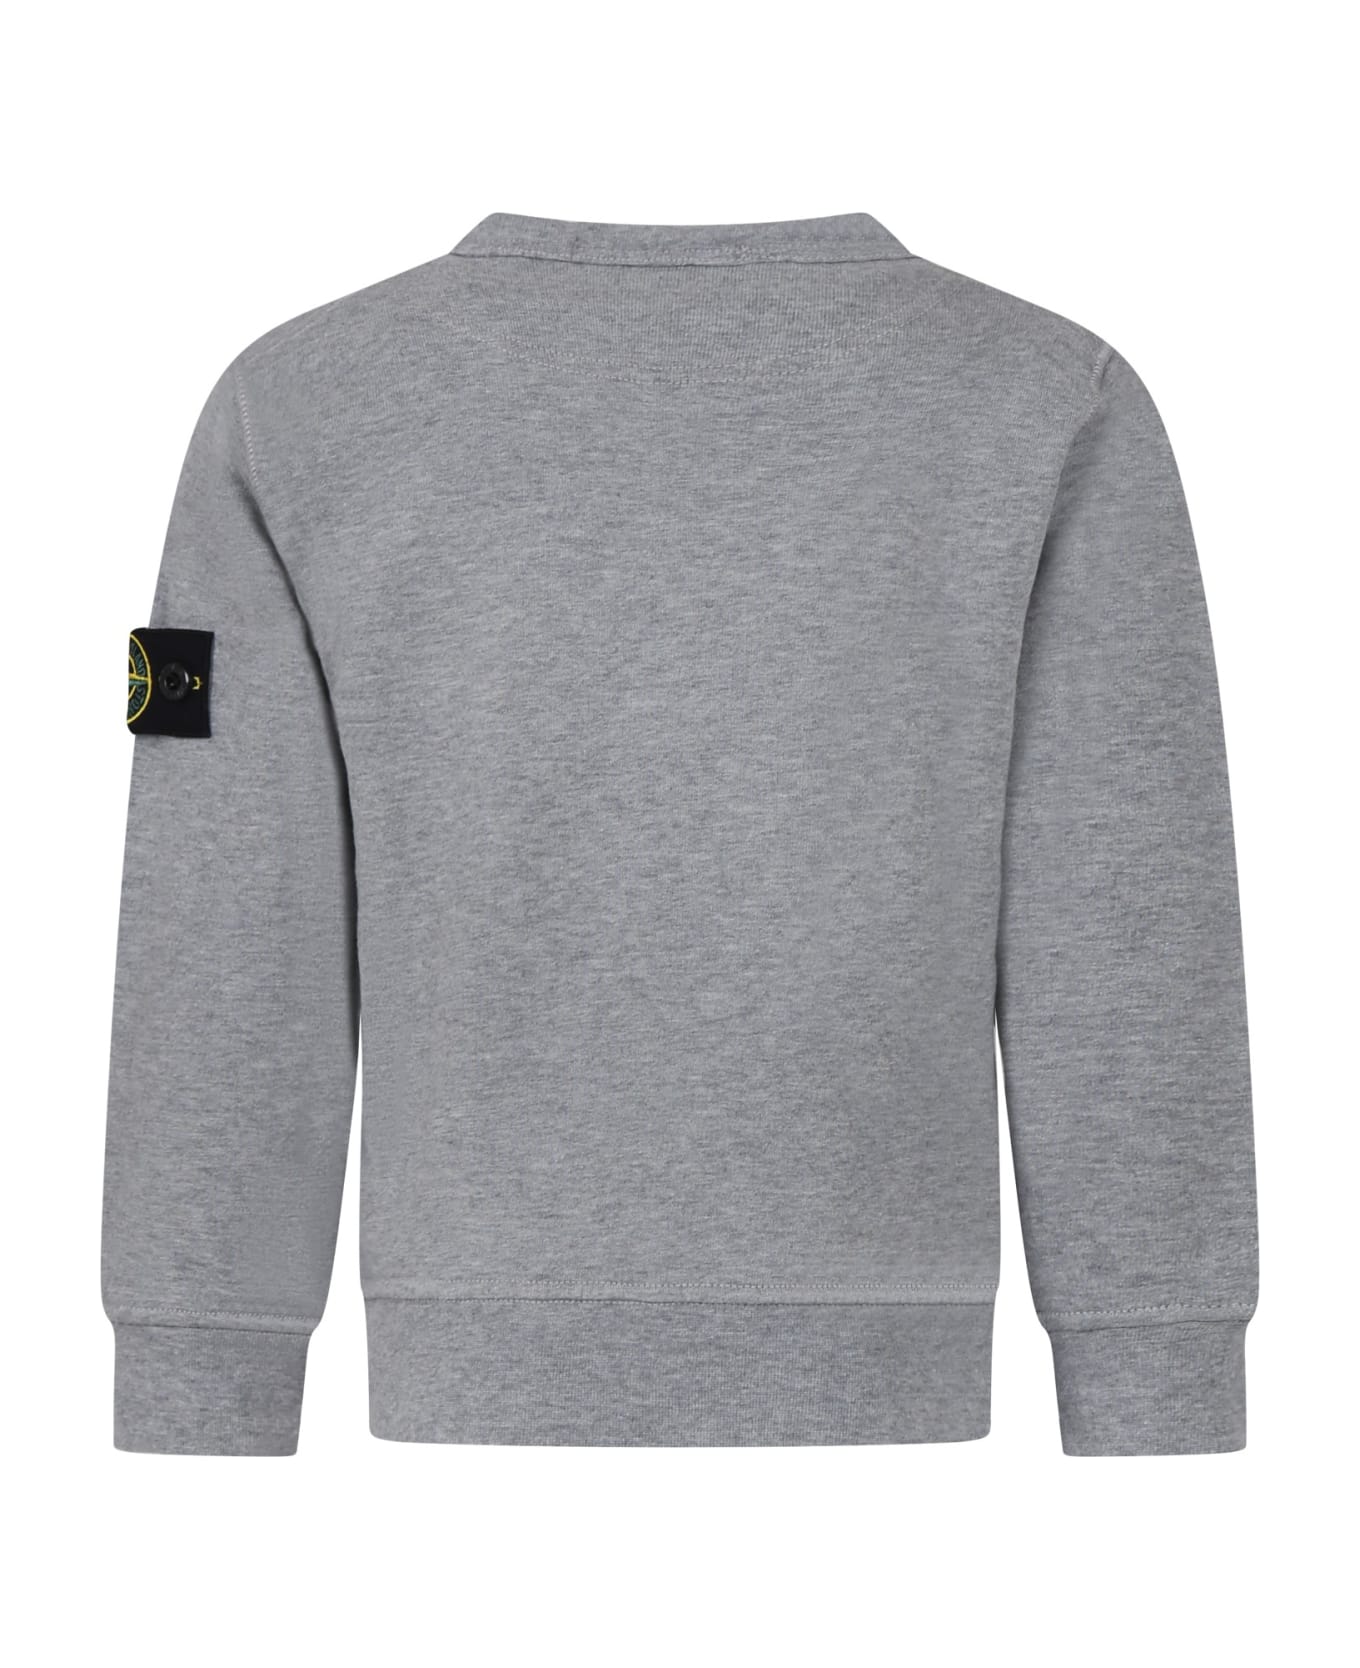 Stone Island Junior Grey Sweatshirt For Boy With Iconic Logo - Grey melange ニットウェア＆スウェットシャツ